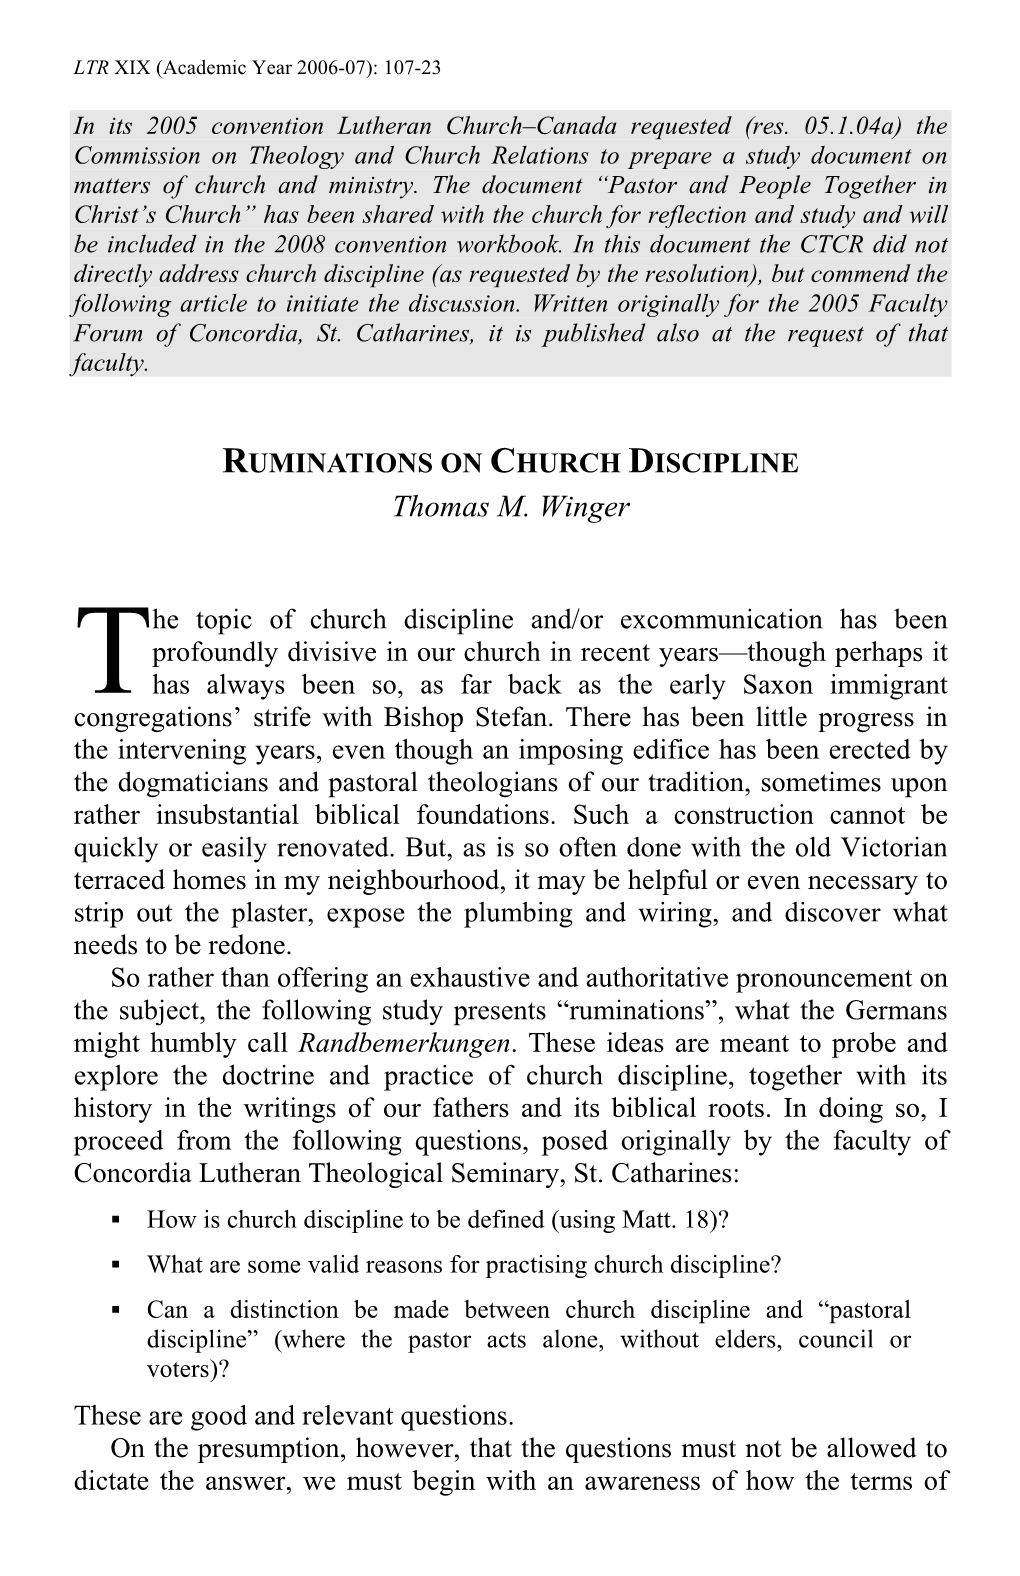 RUMINATIONS on CHURCH DISCIPLINE Thomas M